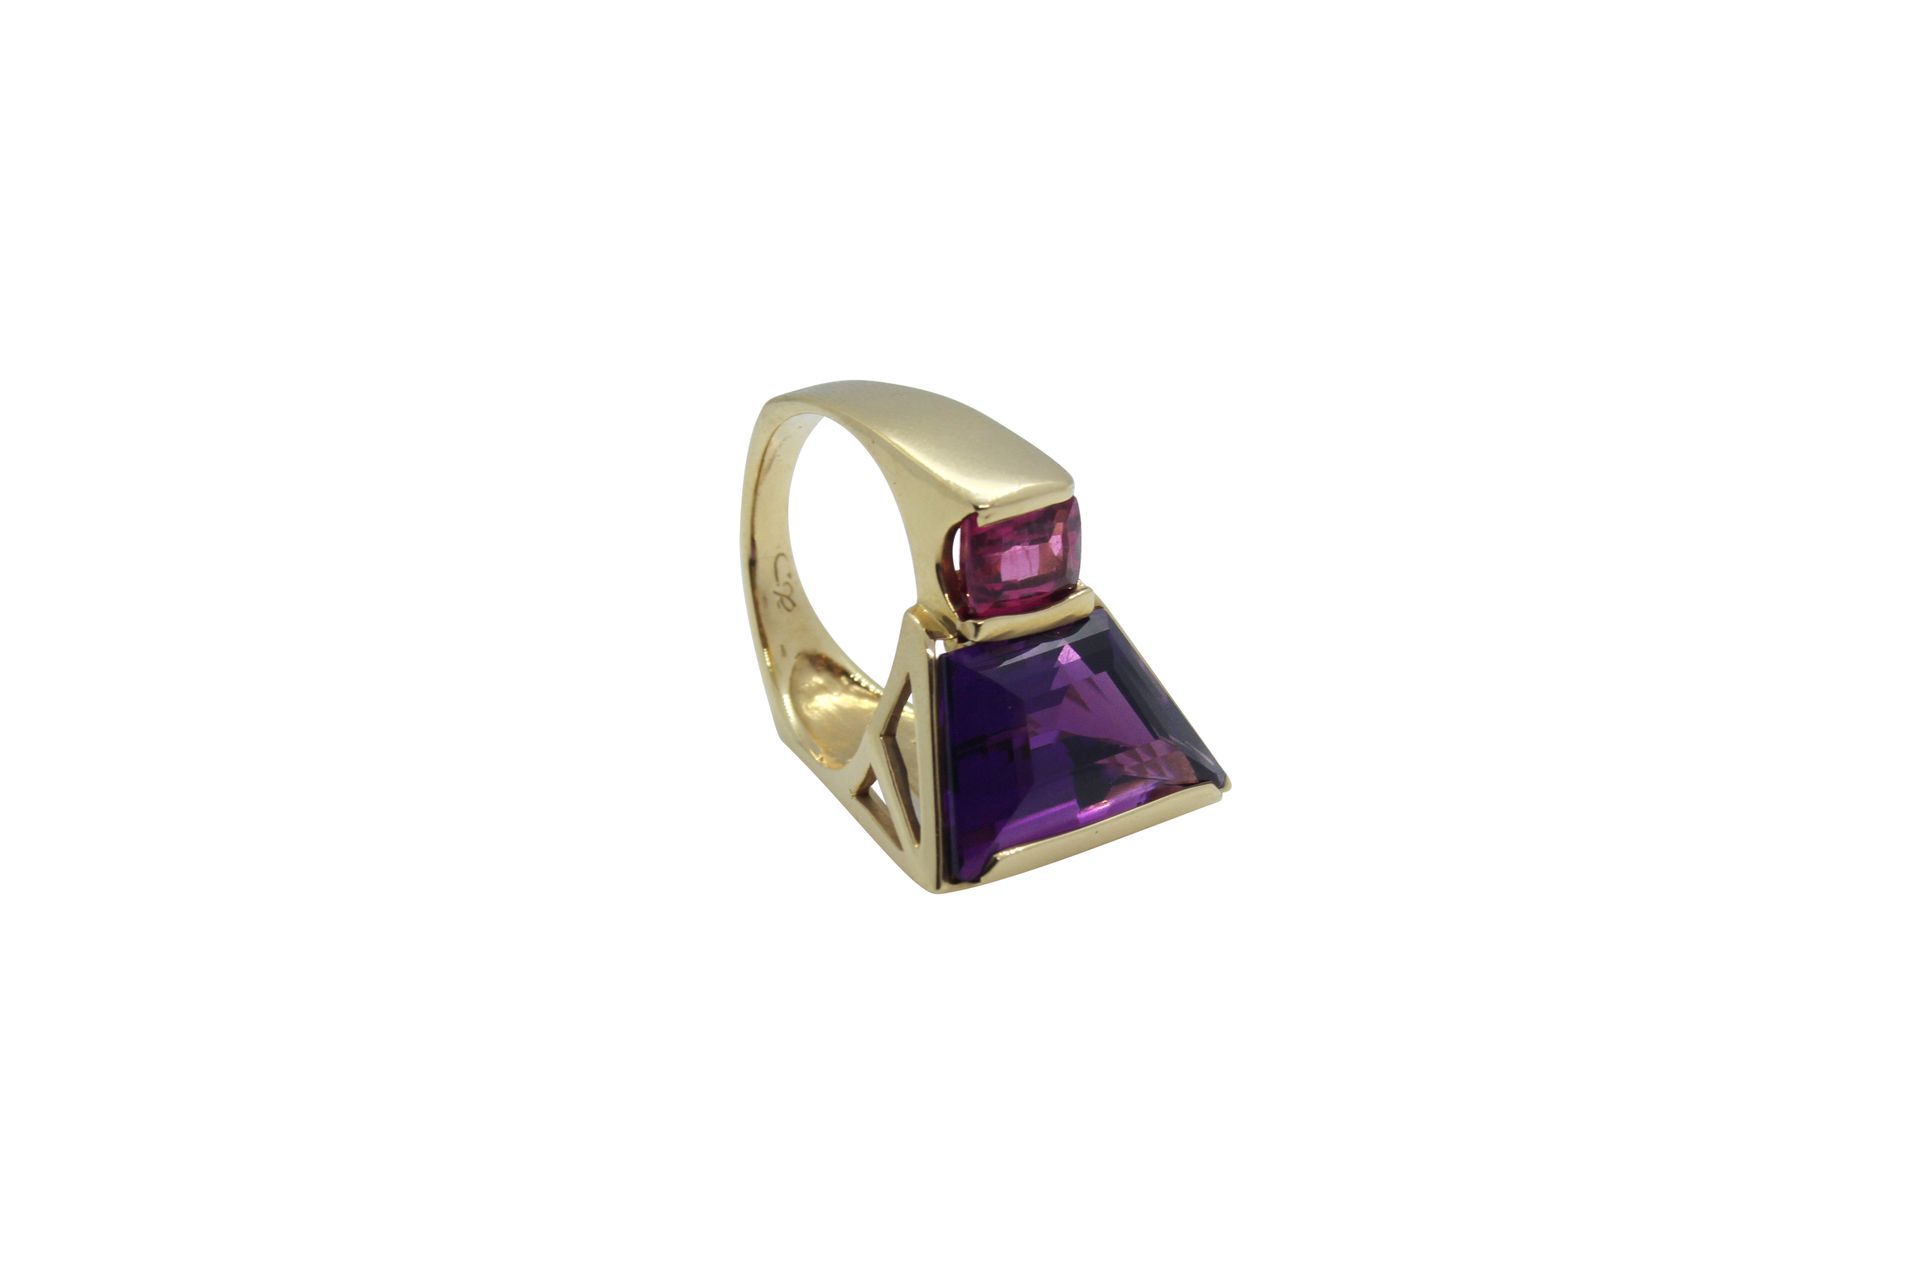 18k gold ring mounted with Tourmaline and Amethyst stones 镶嵌碧玺和紫水晶石头的18K金戒指。毛重约1&hellip;